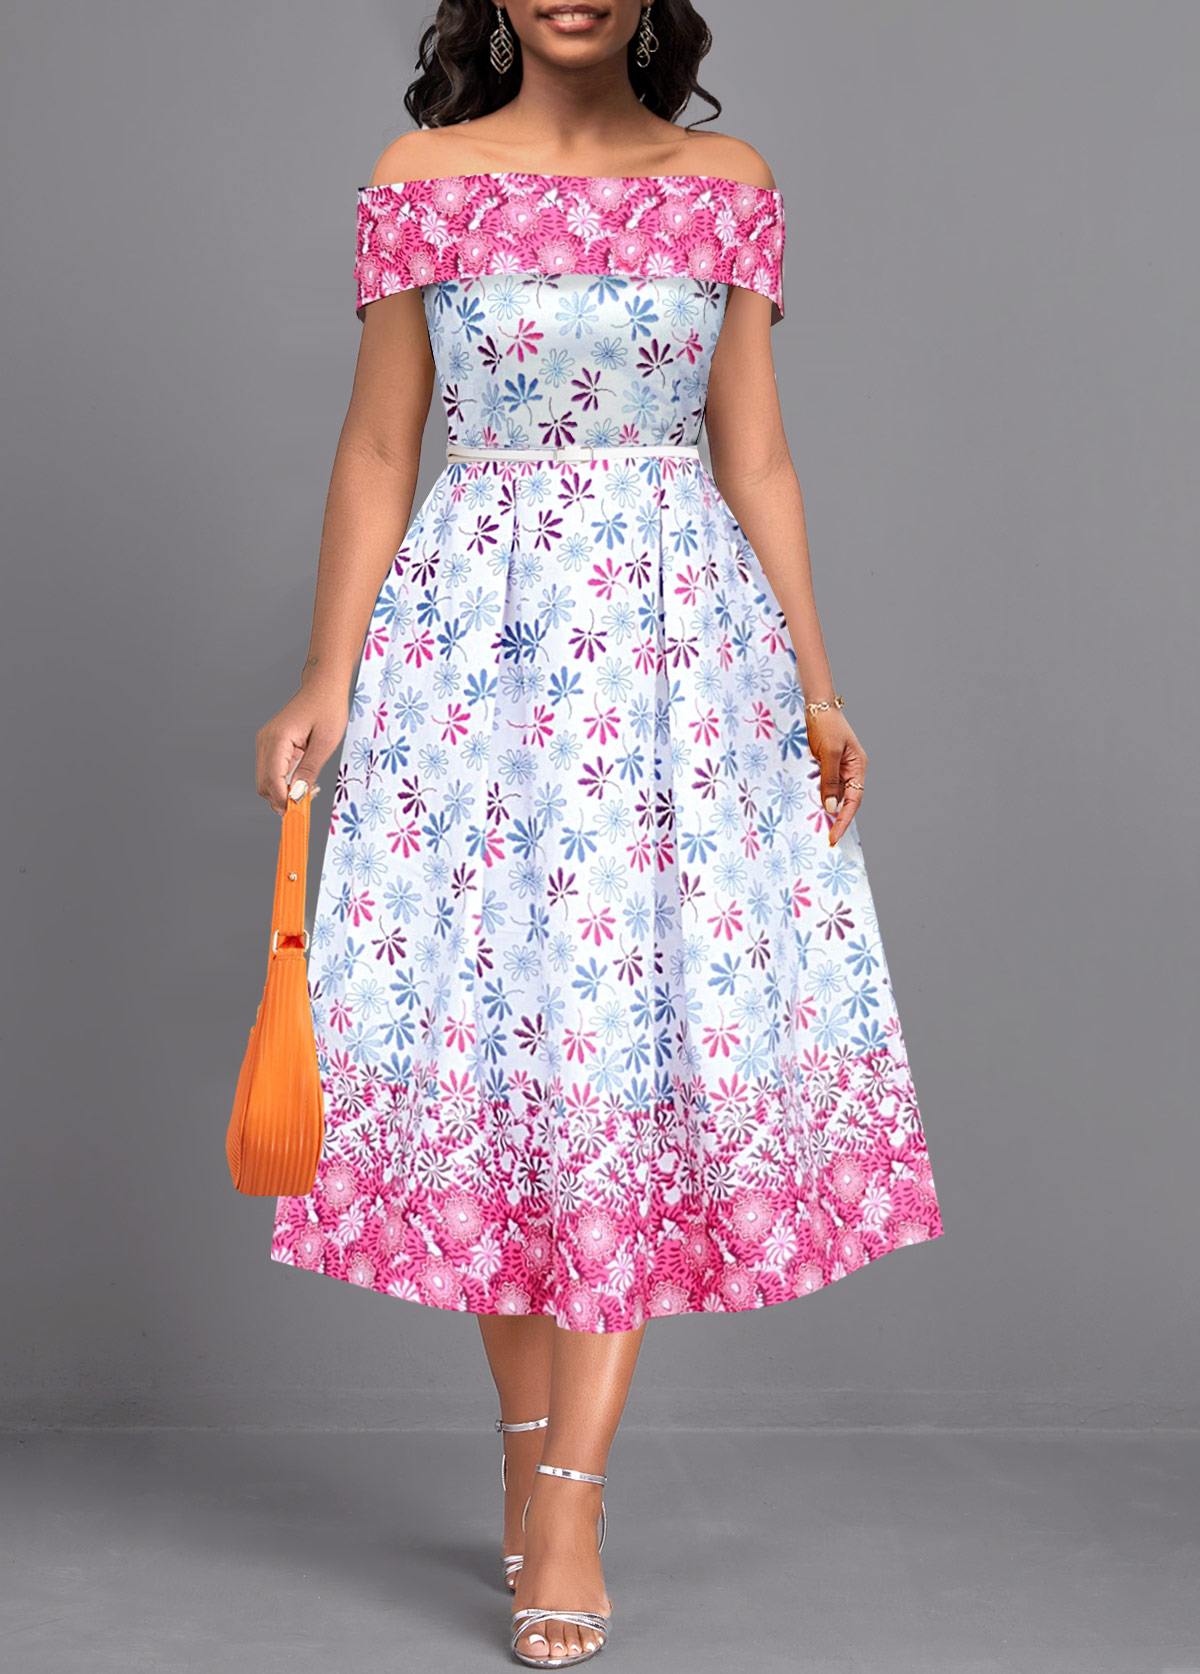 Ditsy Floral Print Patchwork Multi Color Short Sleeve Dress